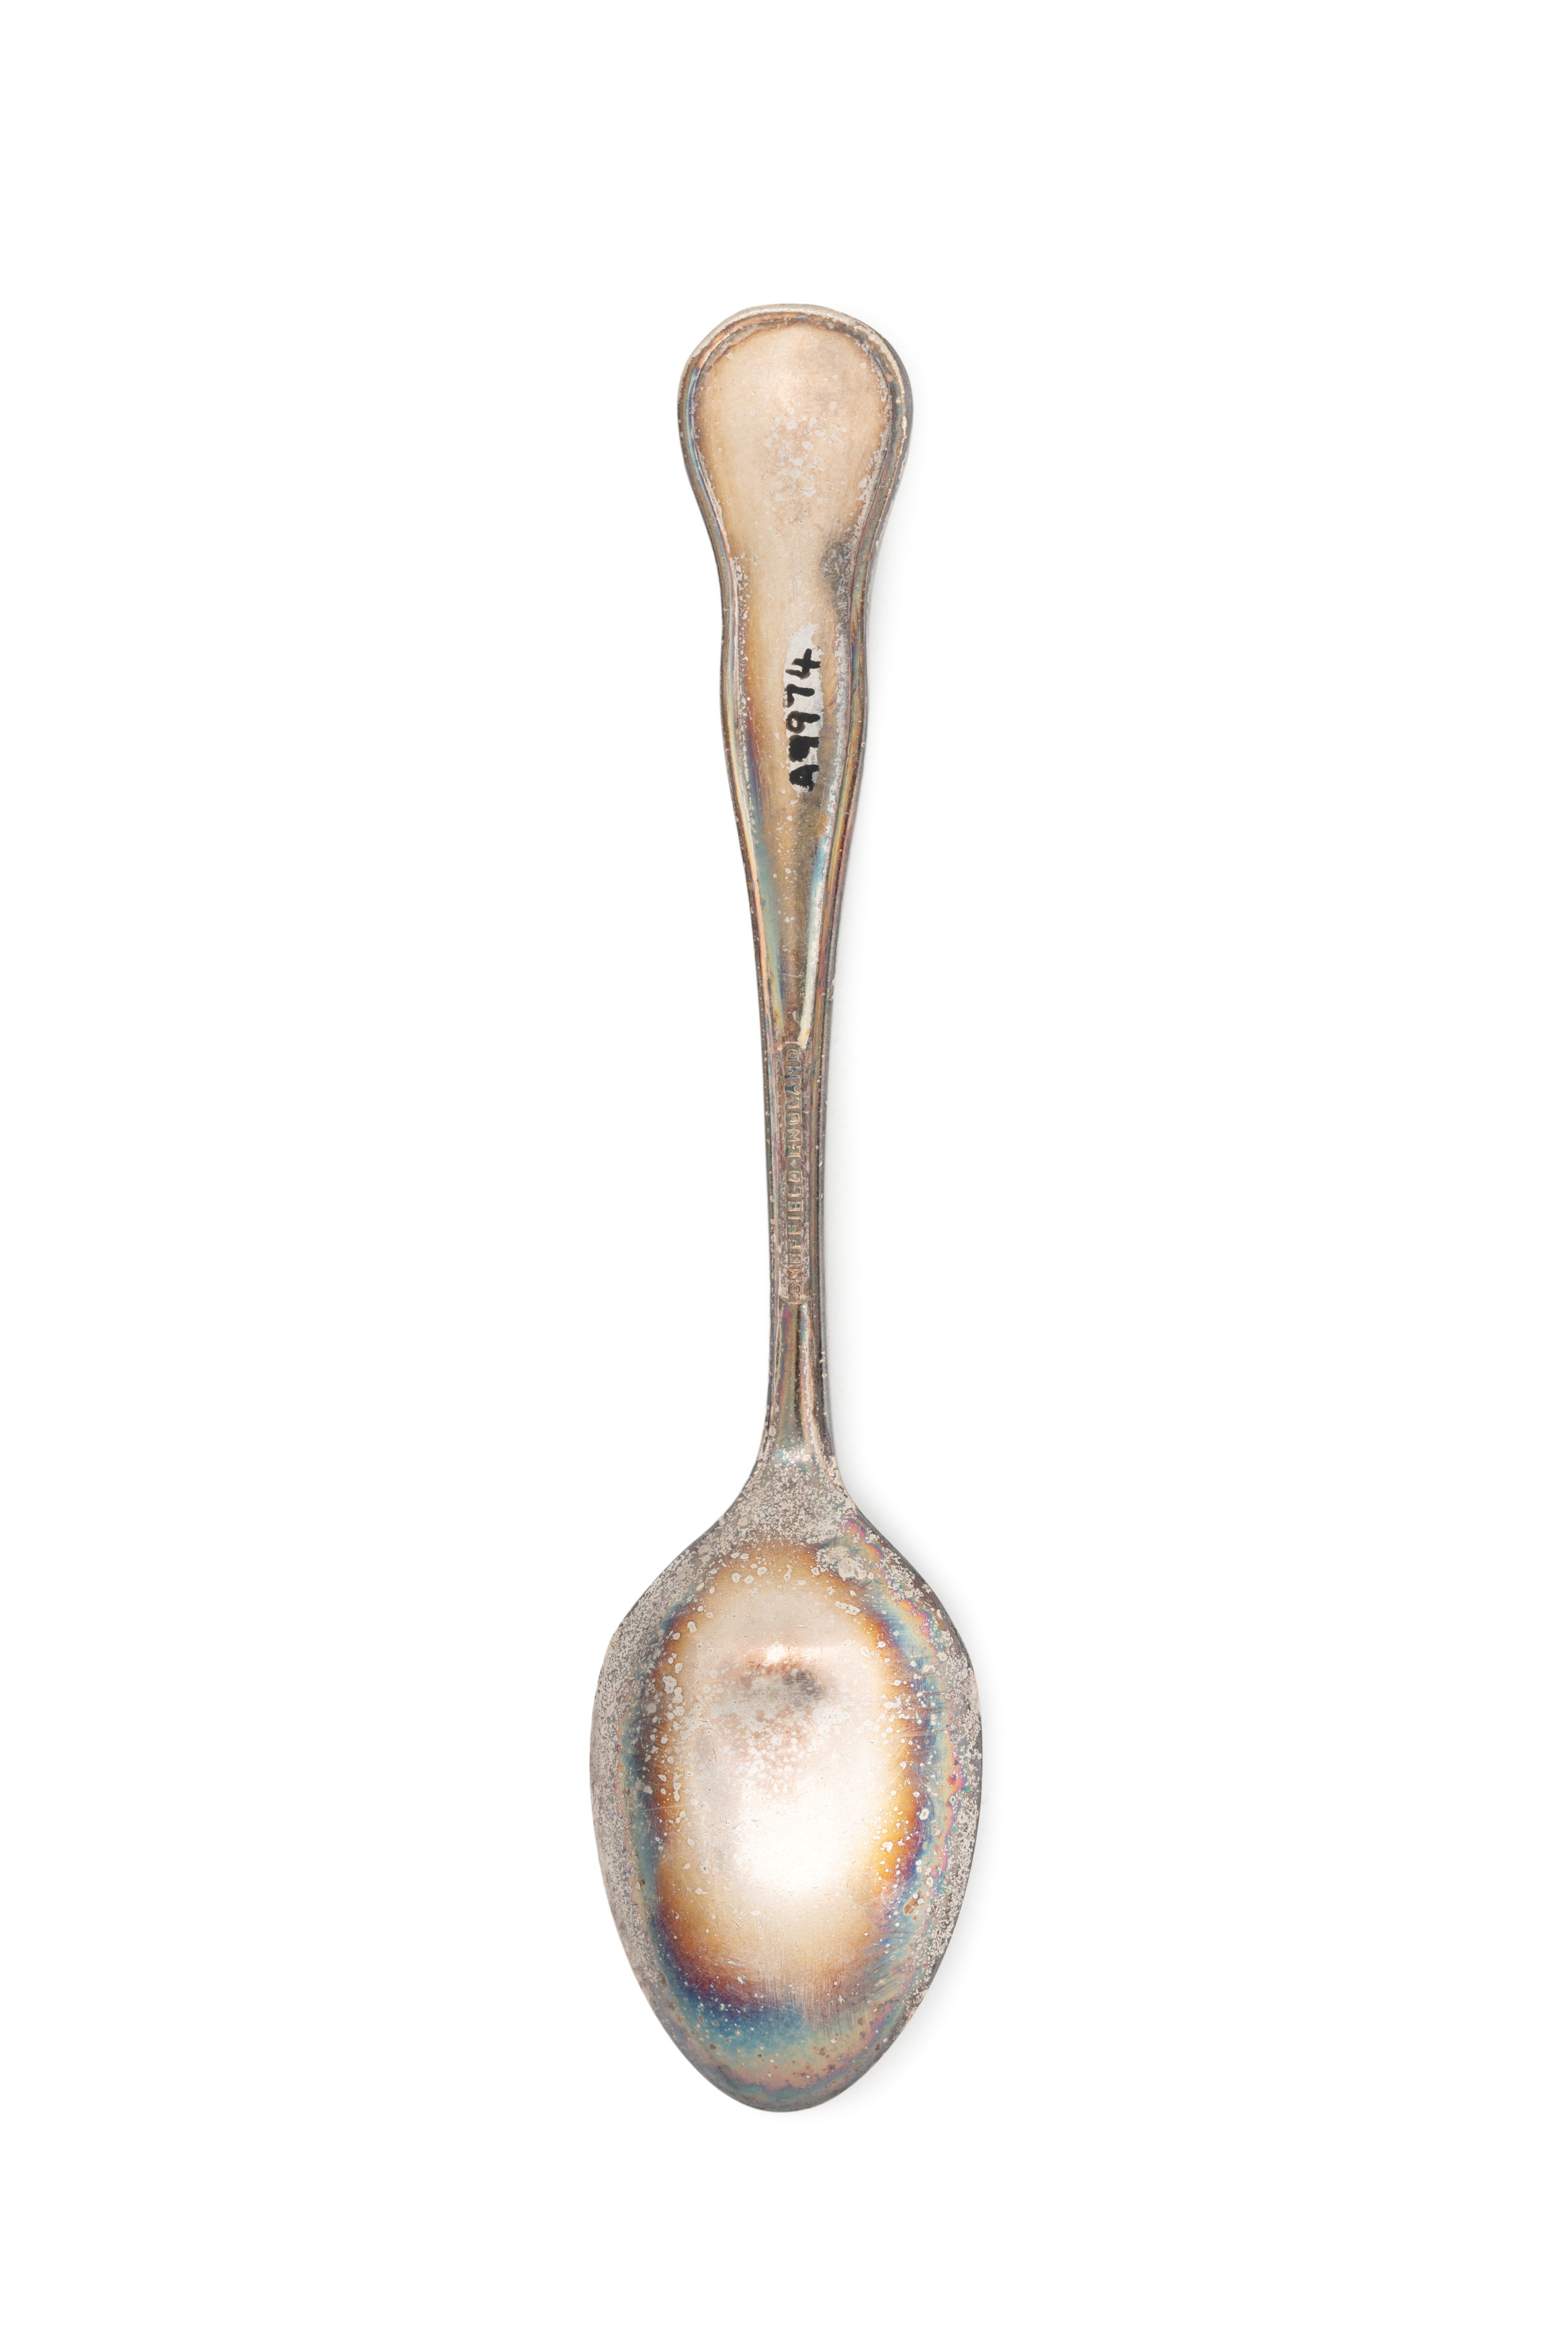 Souvenir teaspoon of the Royal Visit